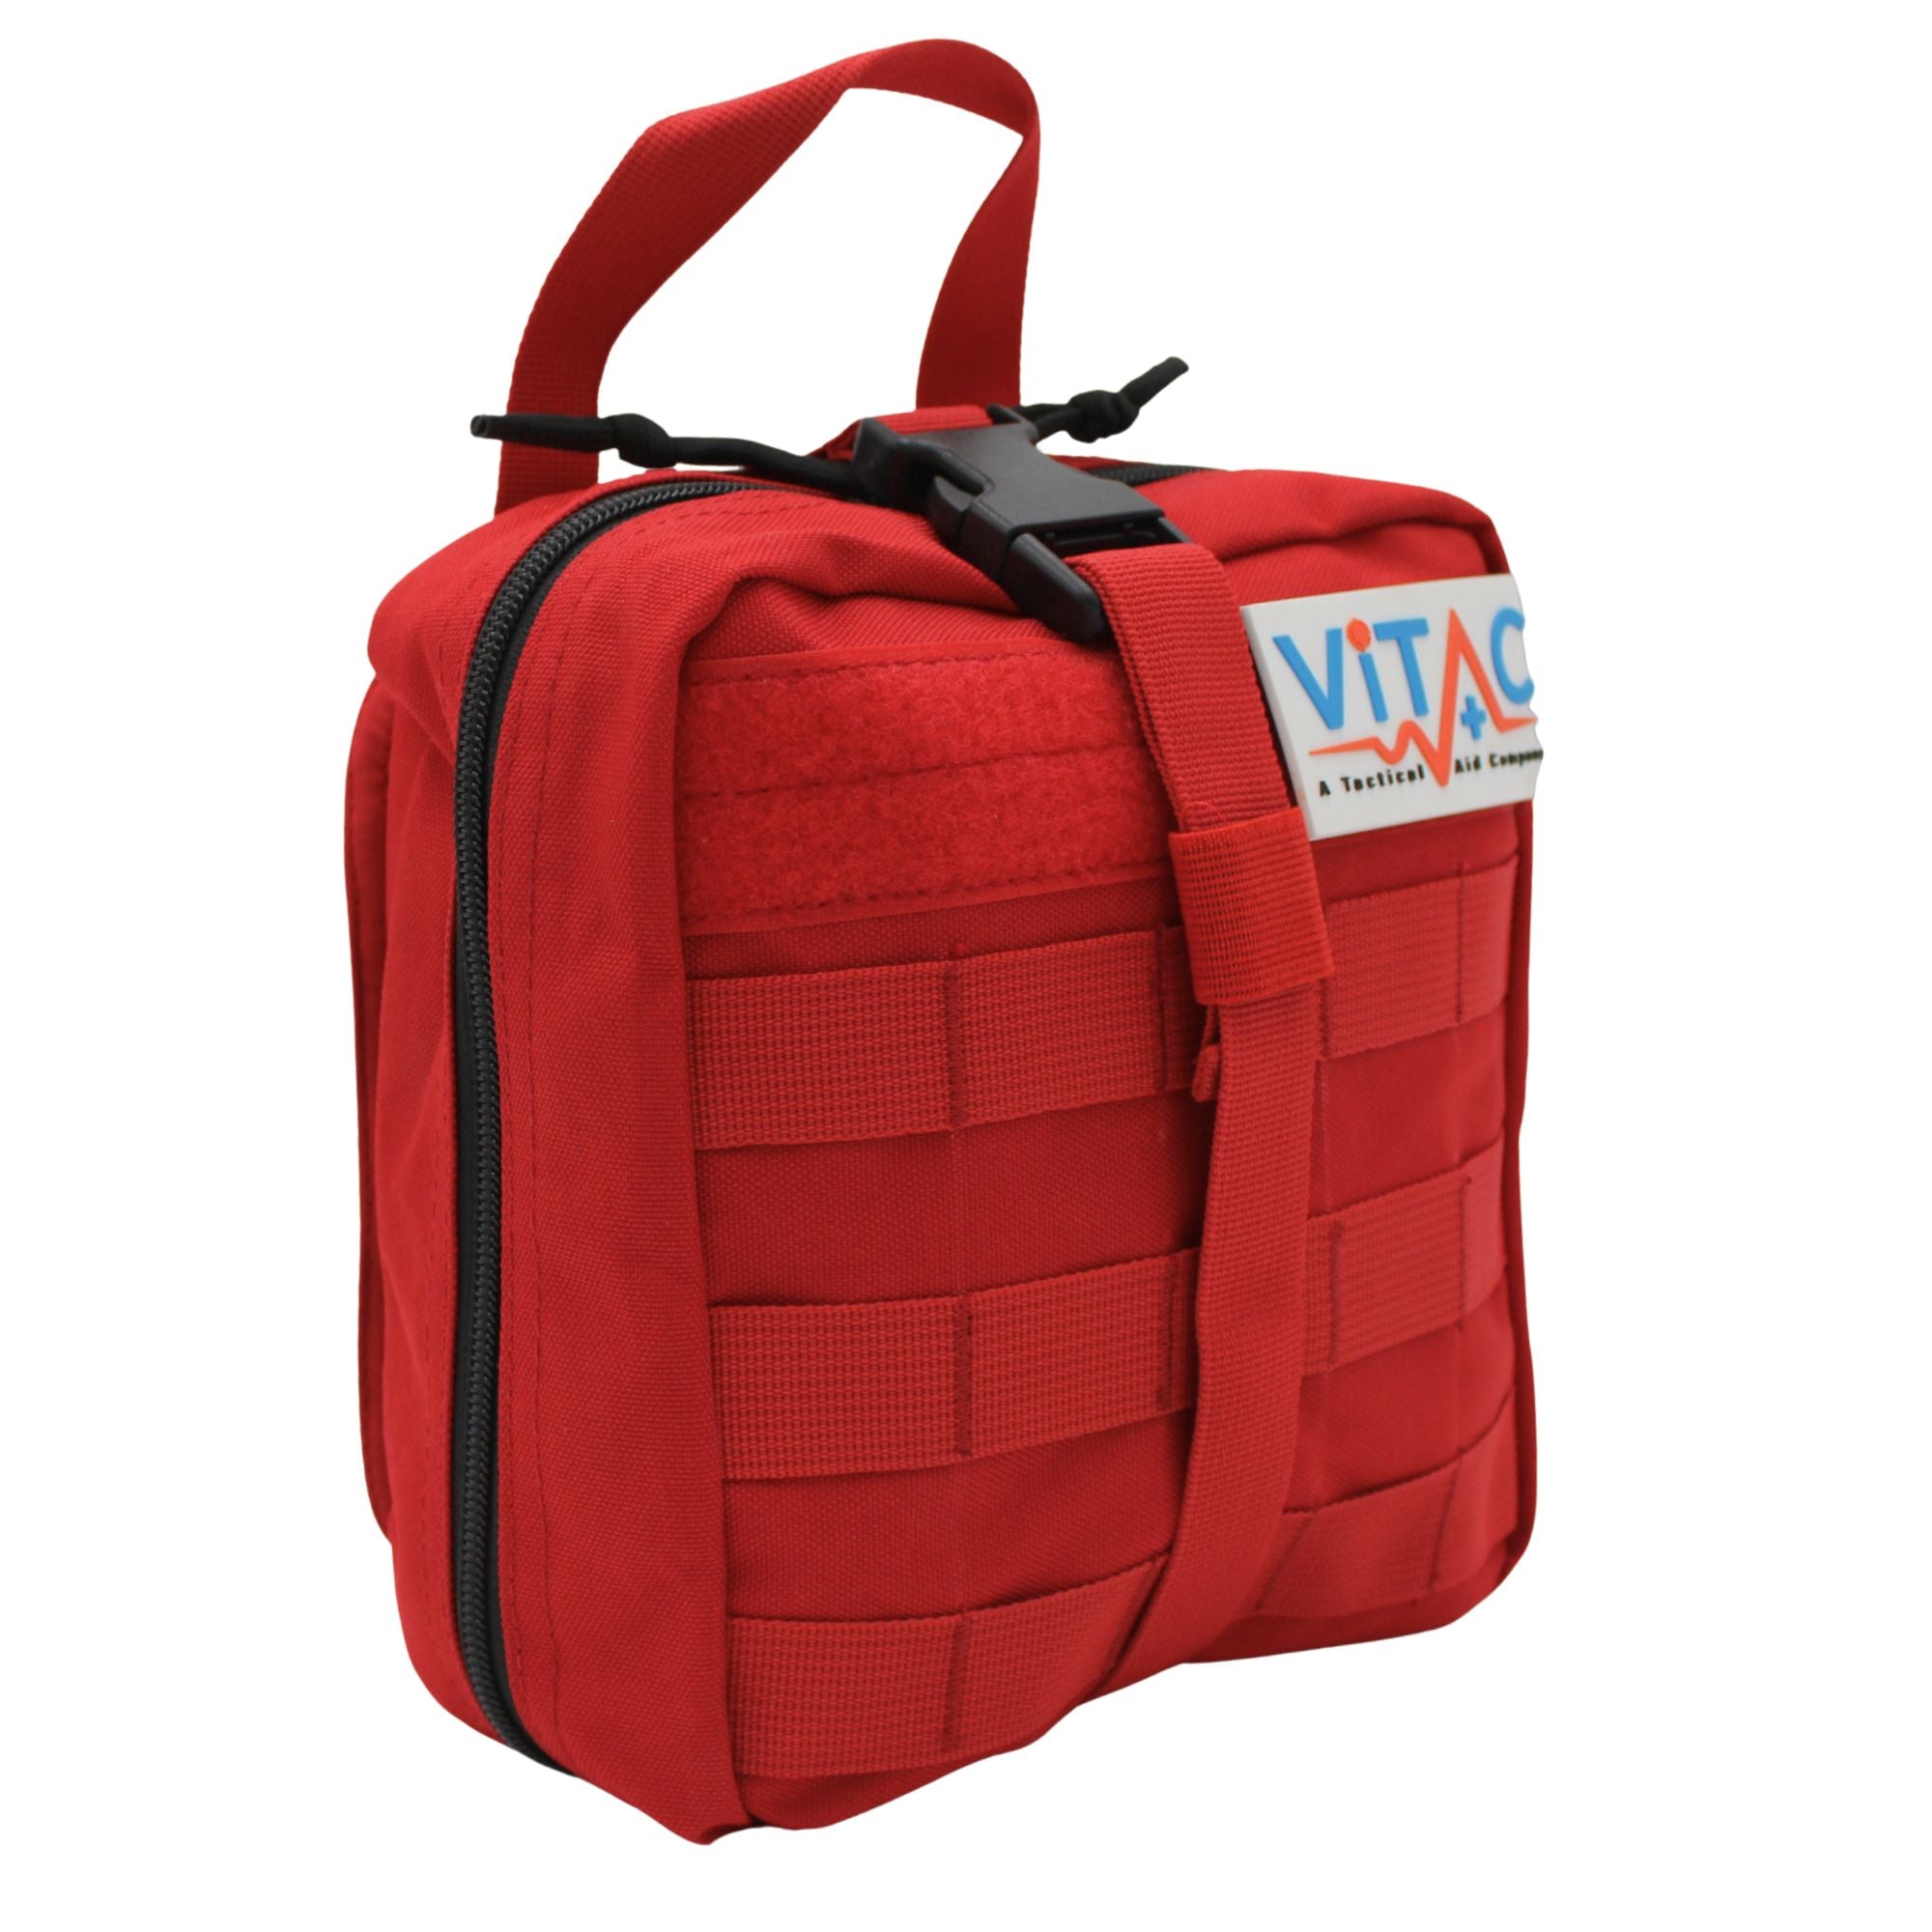 ViTAC Adventurer First Aid Kit Red